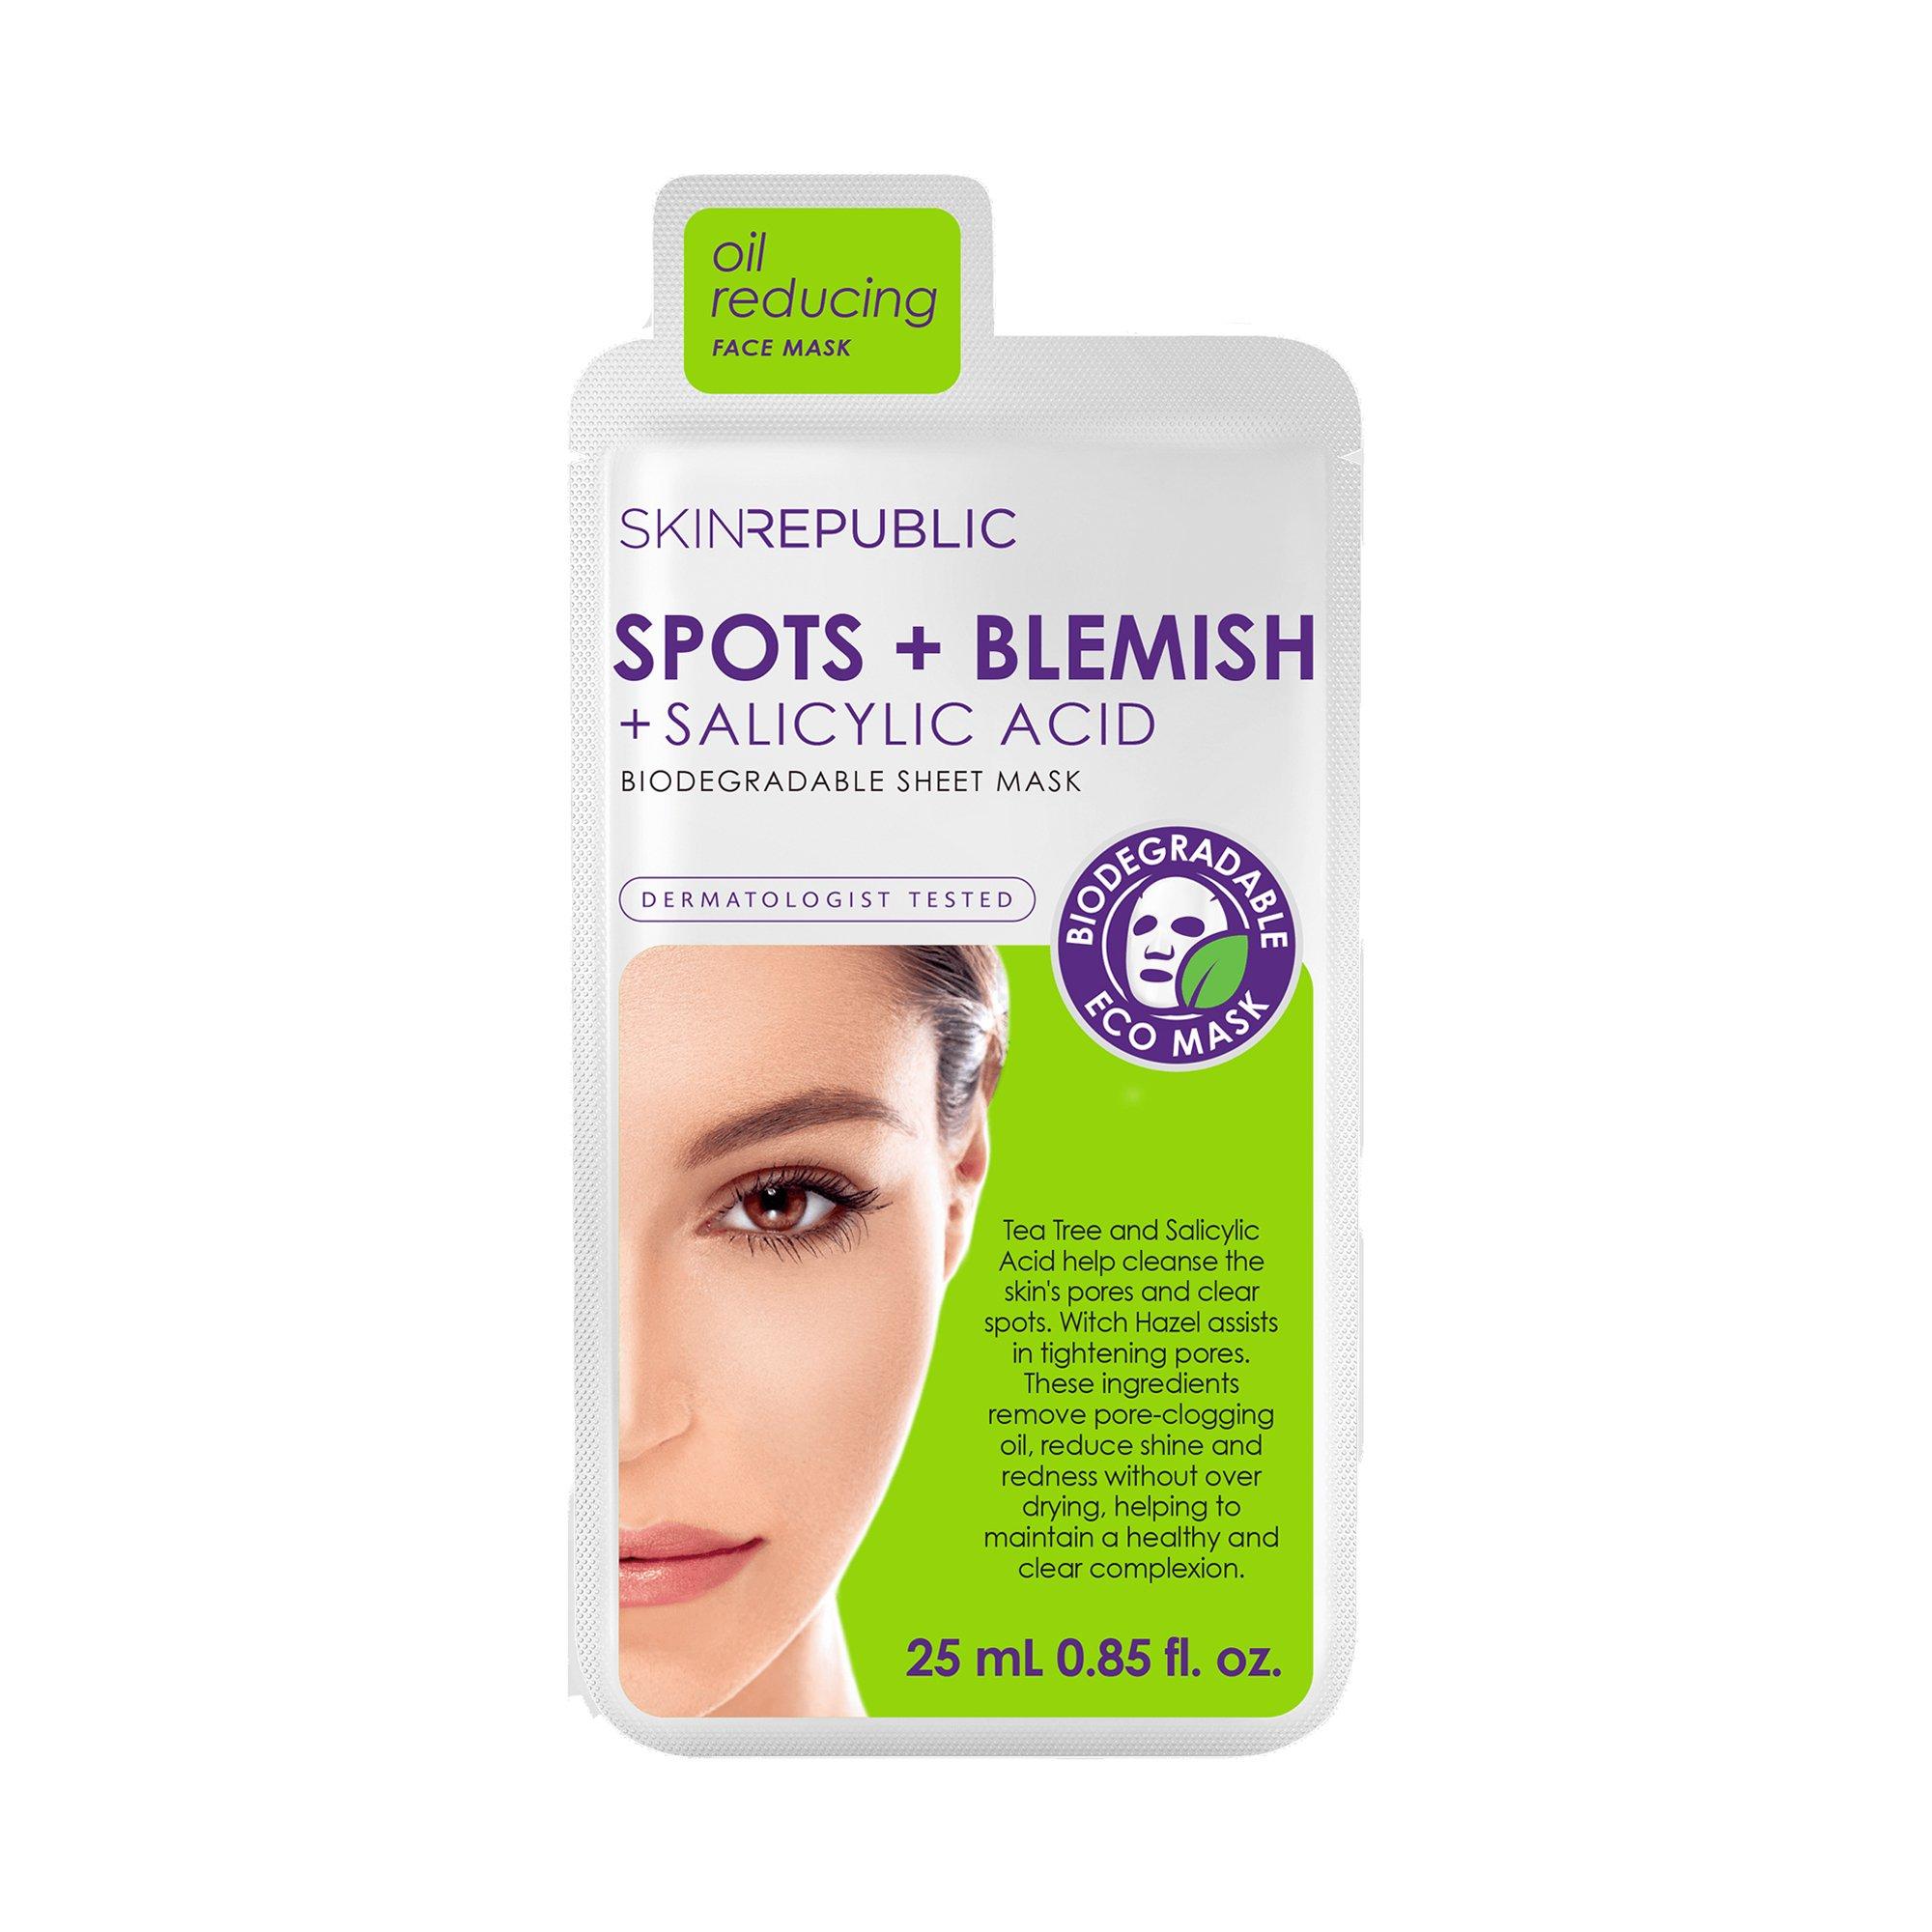 Skin republic Spots + Blemish Spots & Blemish Face Mask 